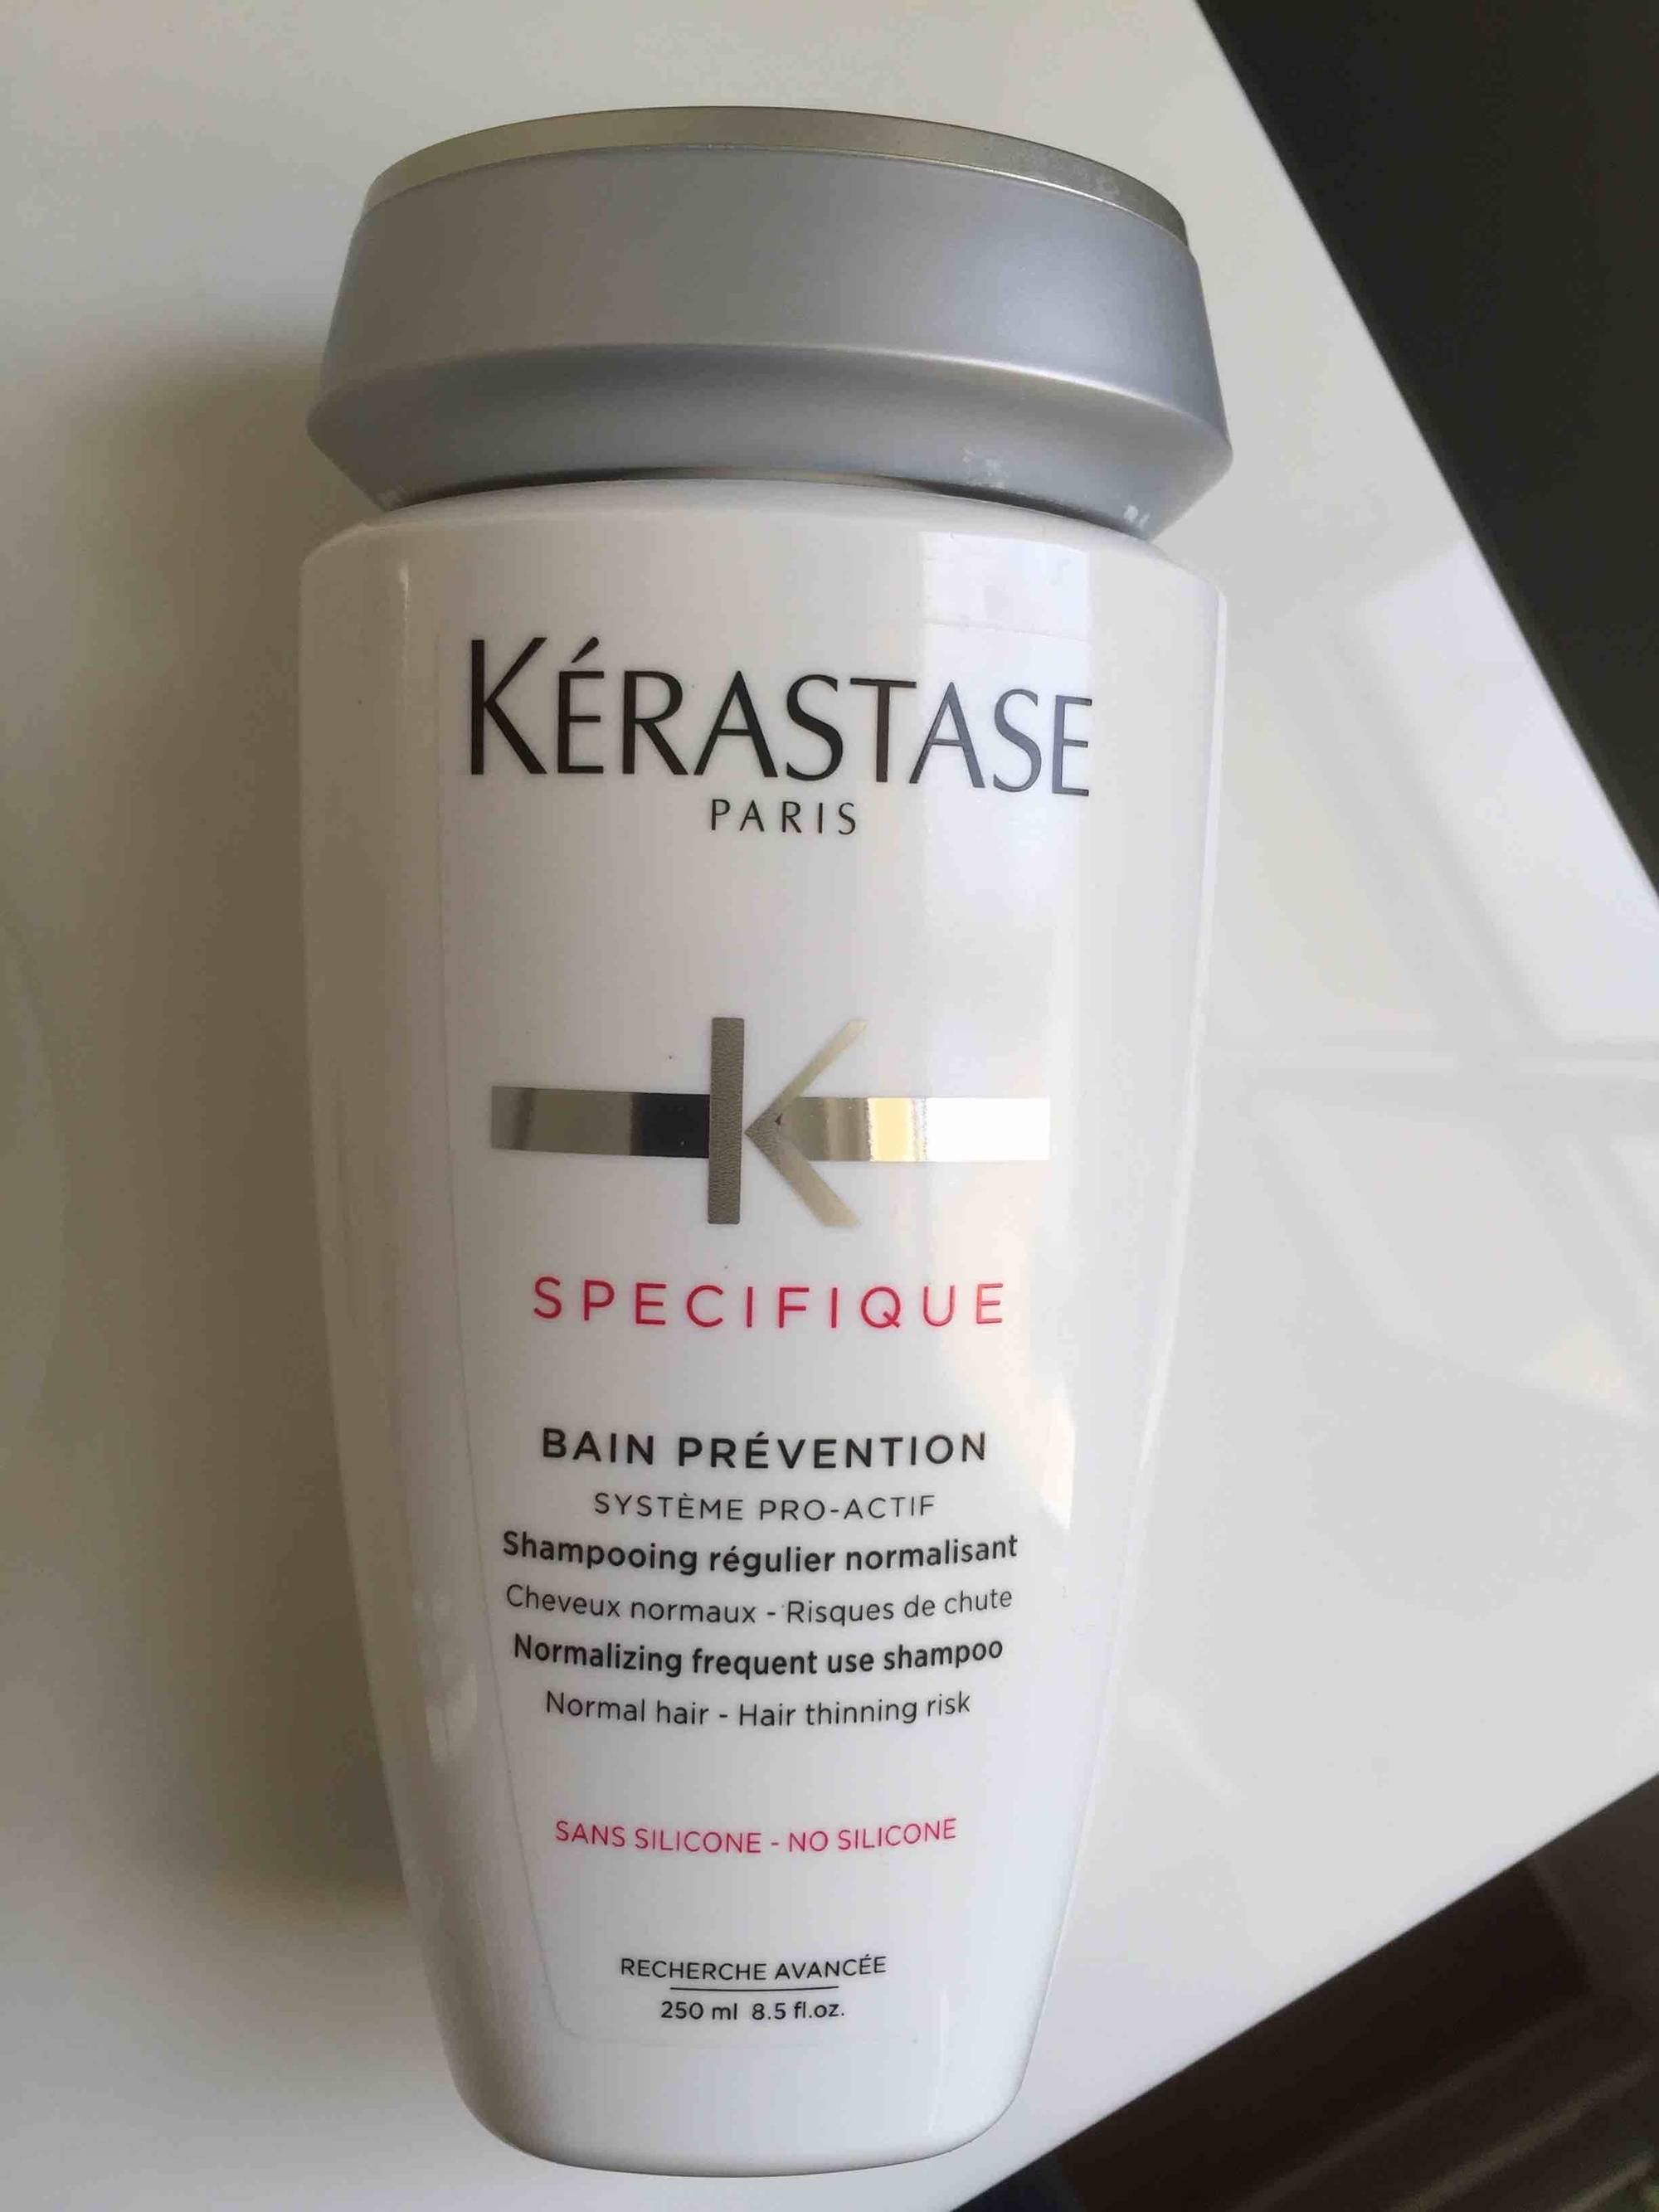 KÉRASTASE - K spécifique - Bain prévention shampooing